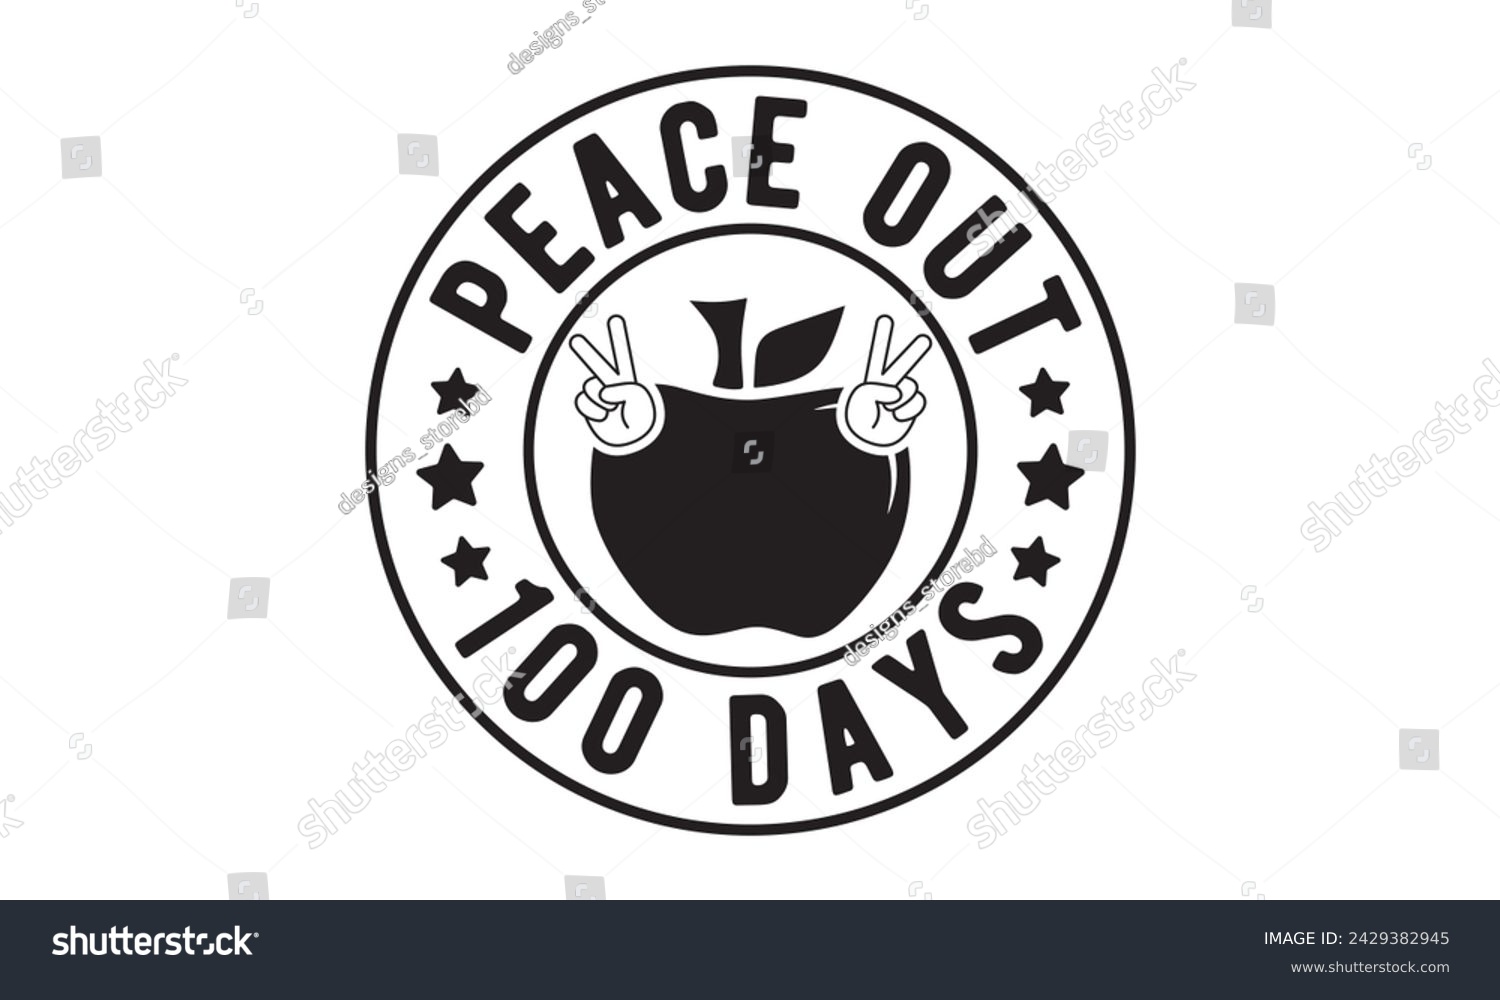 SVG of Peace out 100 days,100 Days of school svg,Teacher svg,t-shirt design,Retro 100 Days svg,funny 100 Days Of School svg,Printable Vector Illustration,Cut Files Cricut,Silhouette,png,Laser cut svg